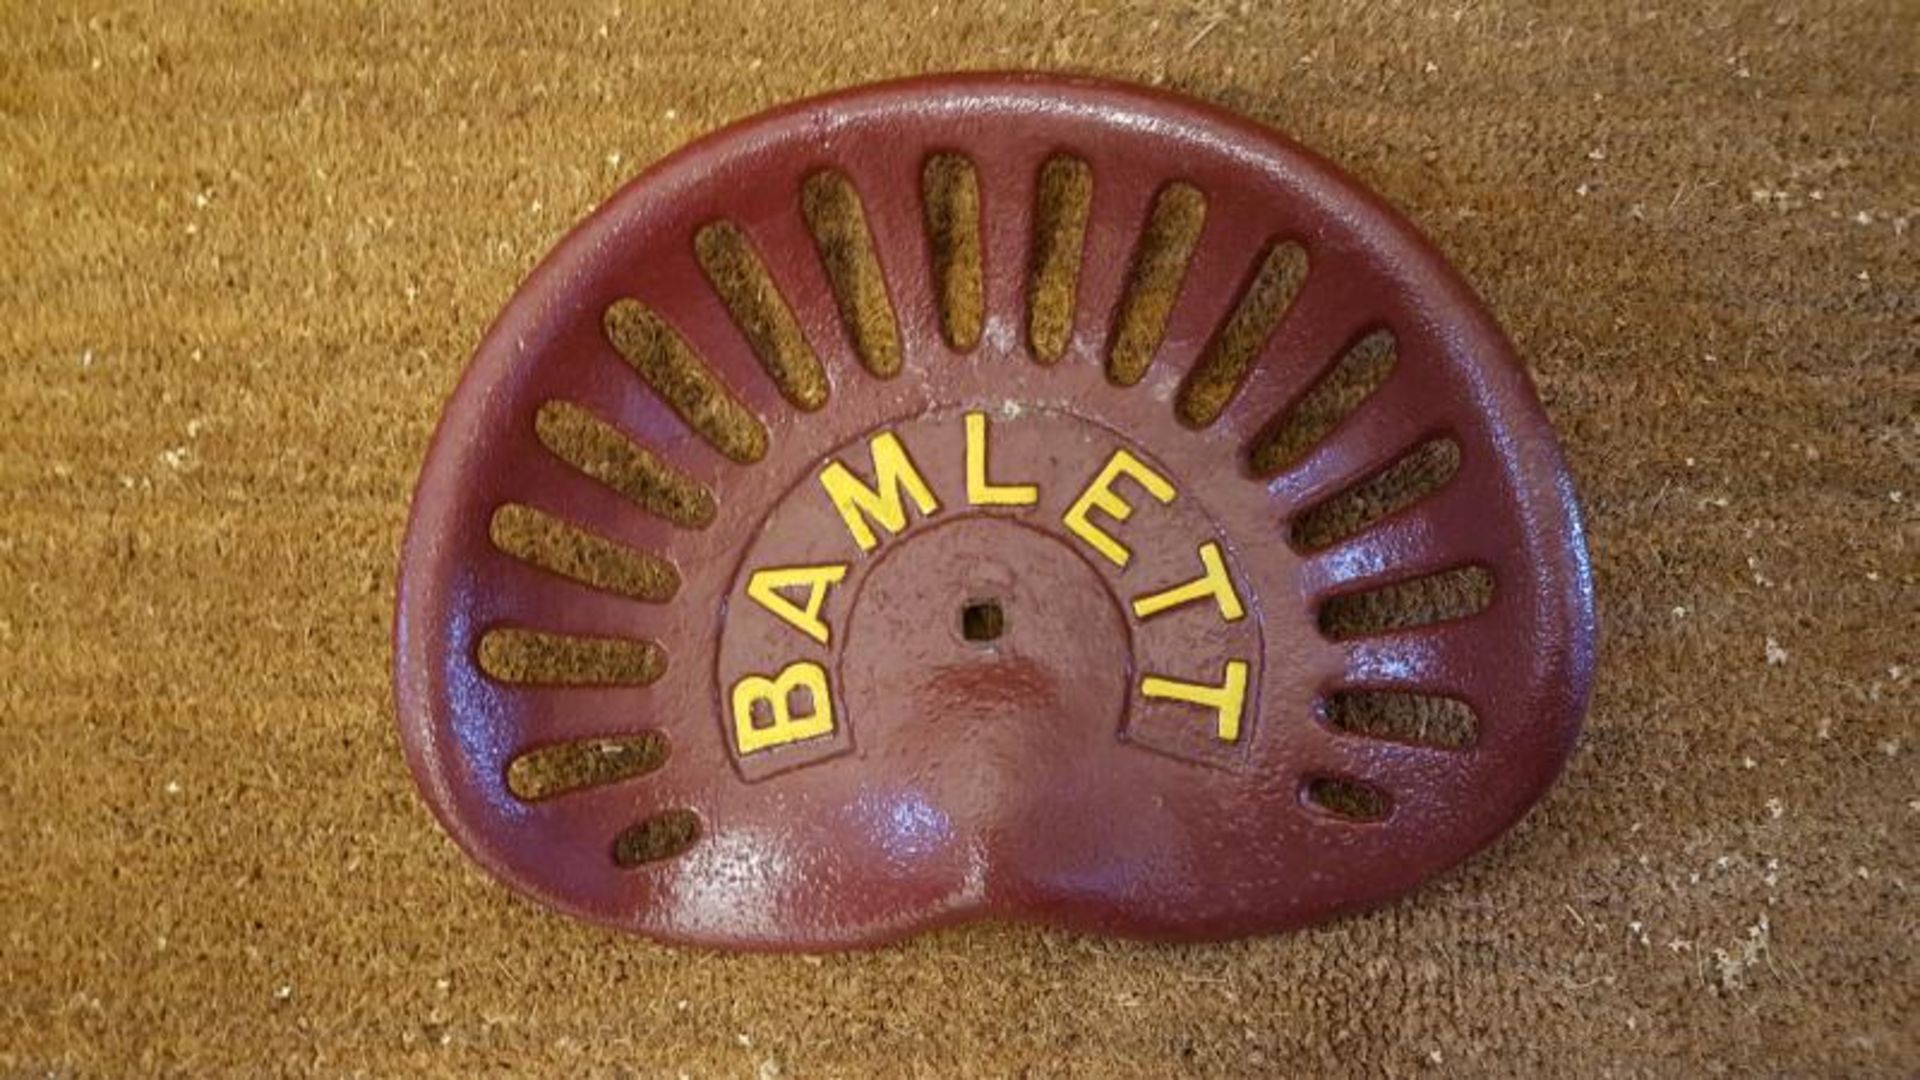 Bamlett - a cast iron seat